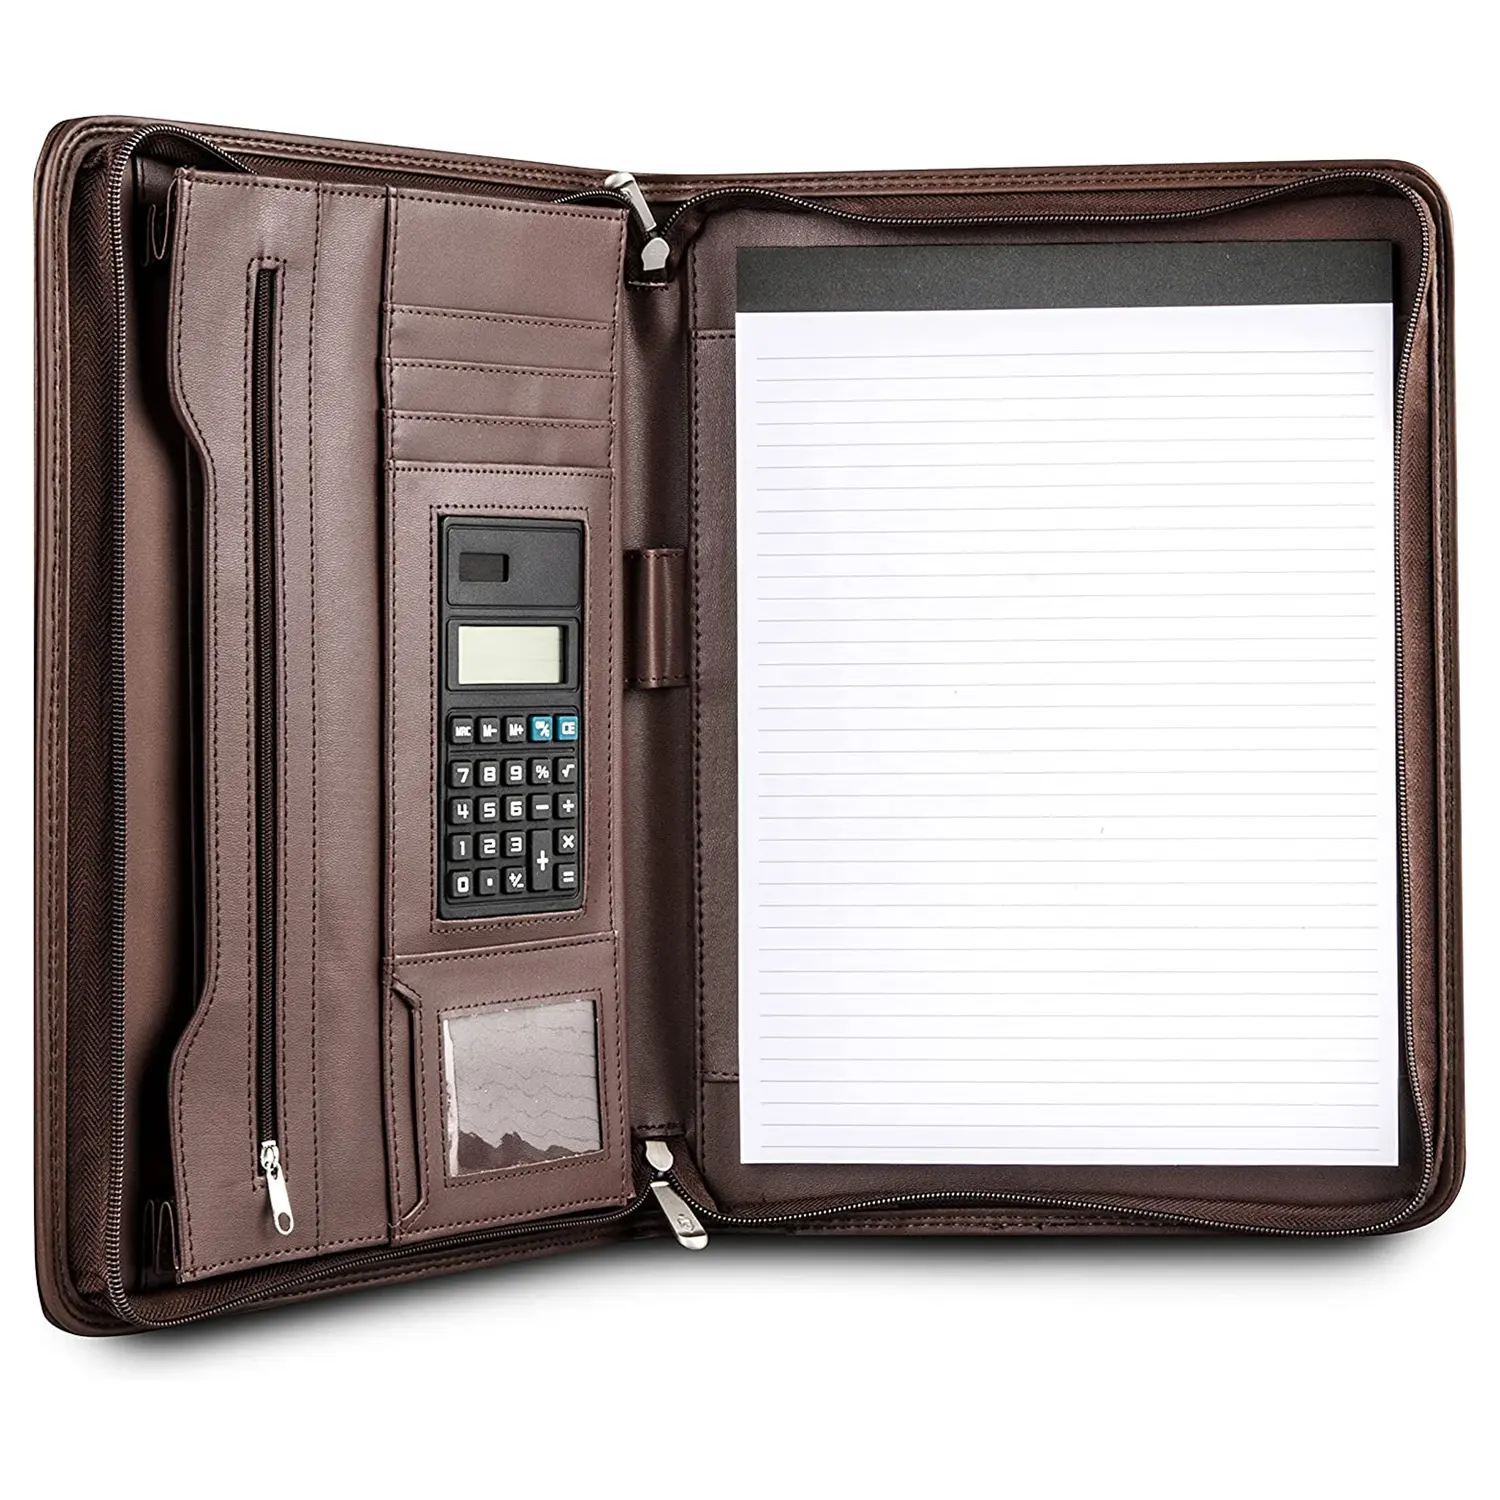 Premium PU Leather Business Portfolio Padfolio Binder Folder Resume Legal Document Organizer Calculator case with Zipper